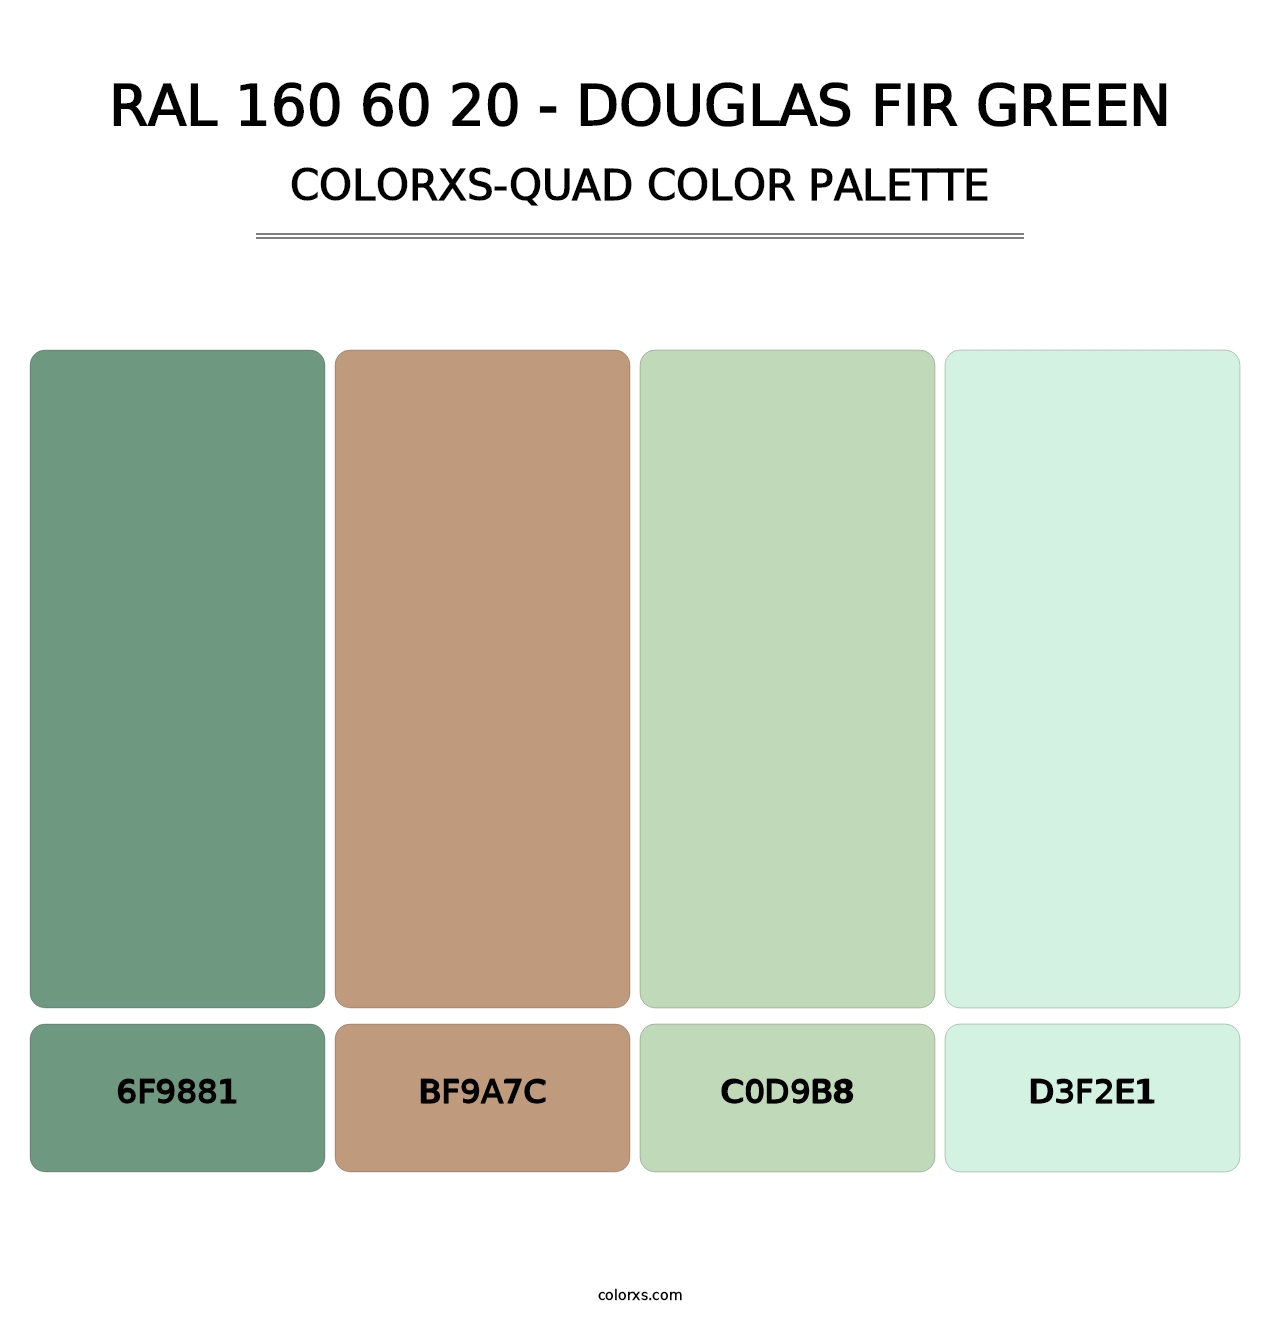 RAL 160 60 20 - Douglas Fir Green - Colorxs Quad Palette